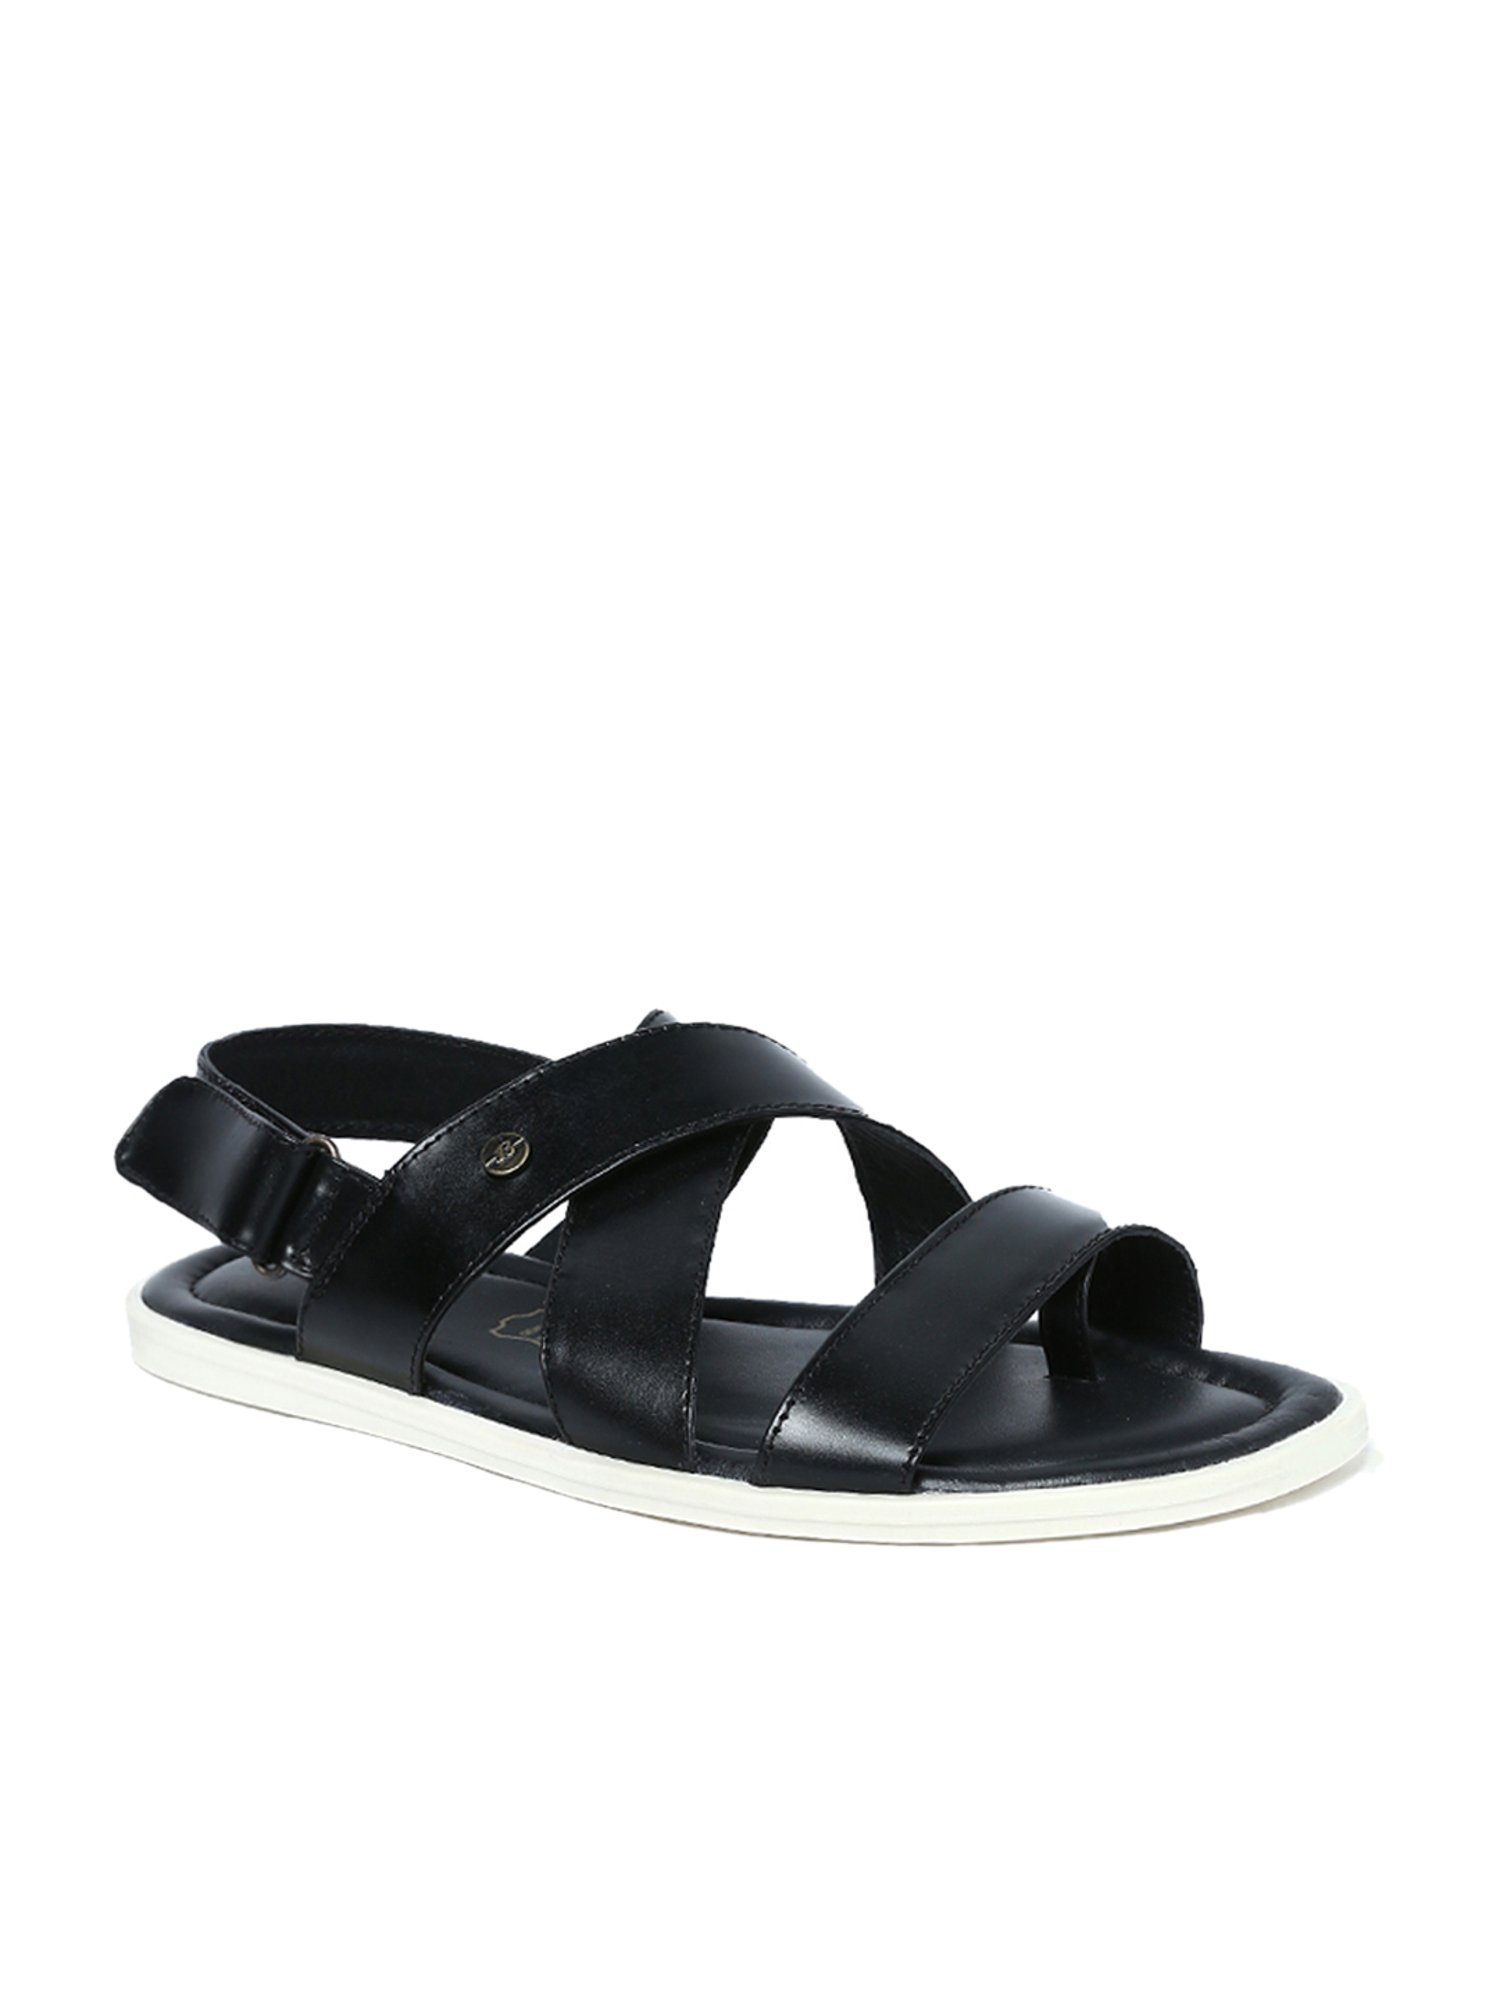 Buy Tan Sandals for Men by Bata Online | Ajio.com